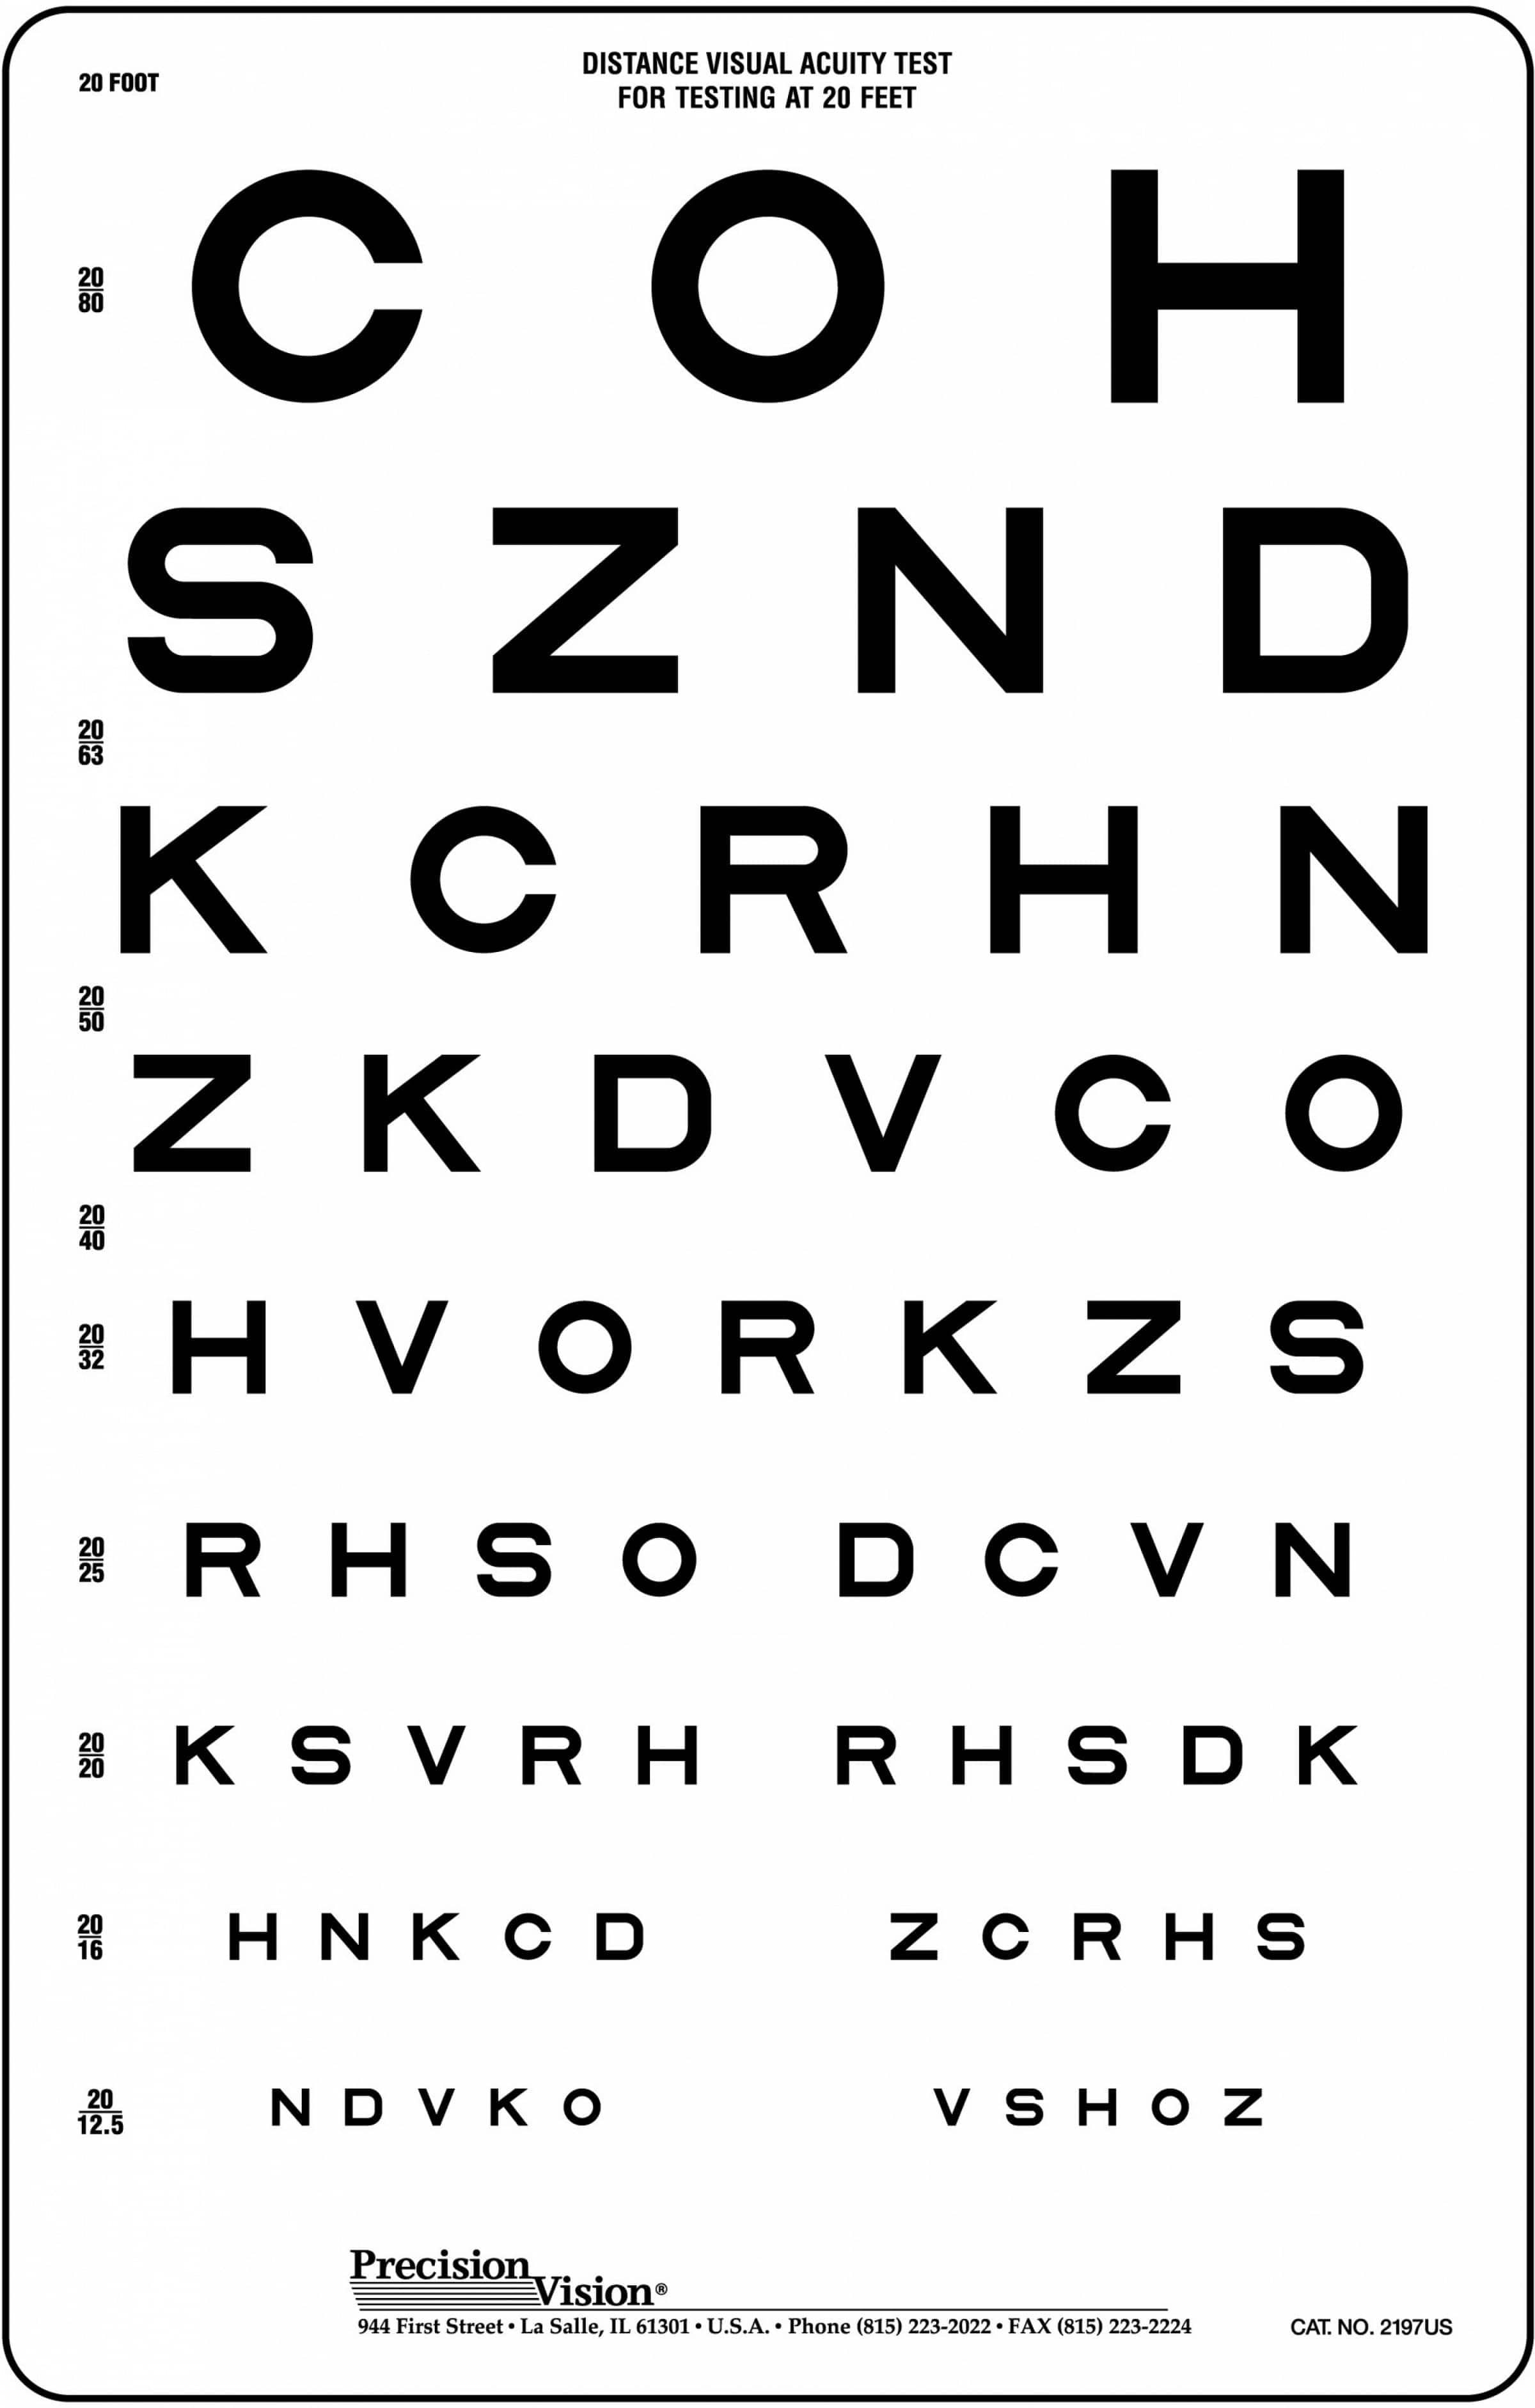 How To Use Sloan Eye Chart